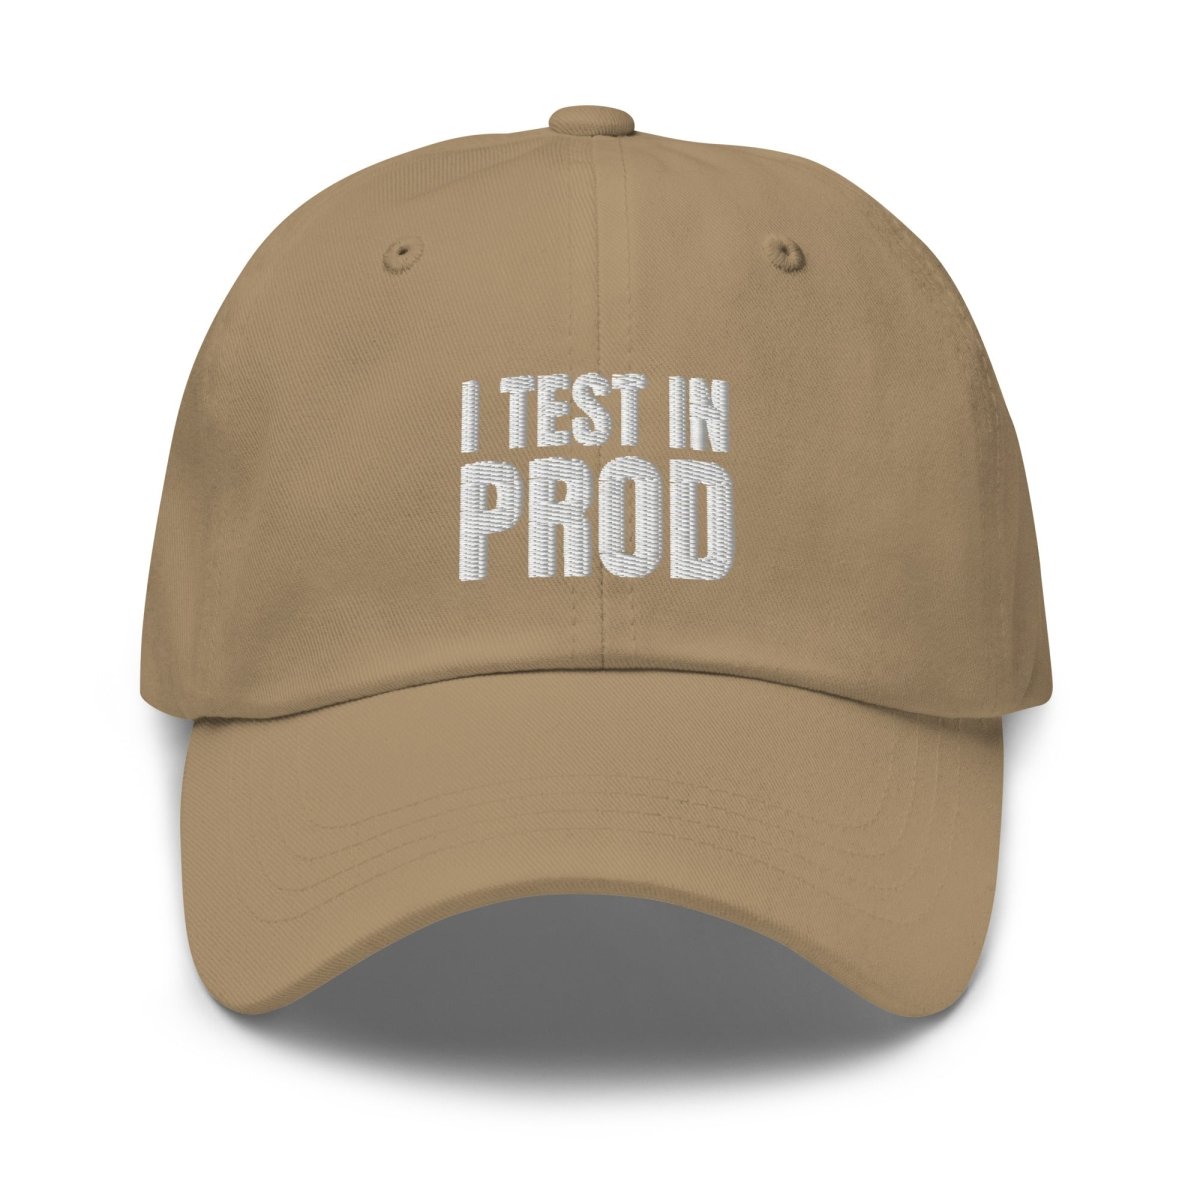 I Test in Prod Embroidered Cap - Khaki - AI Store